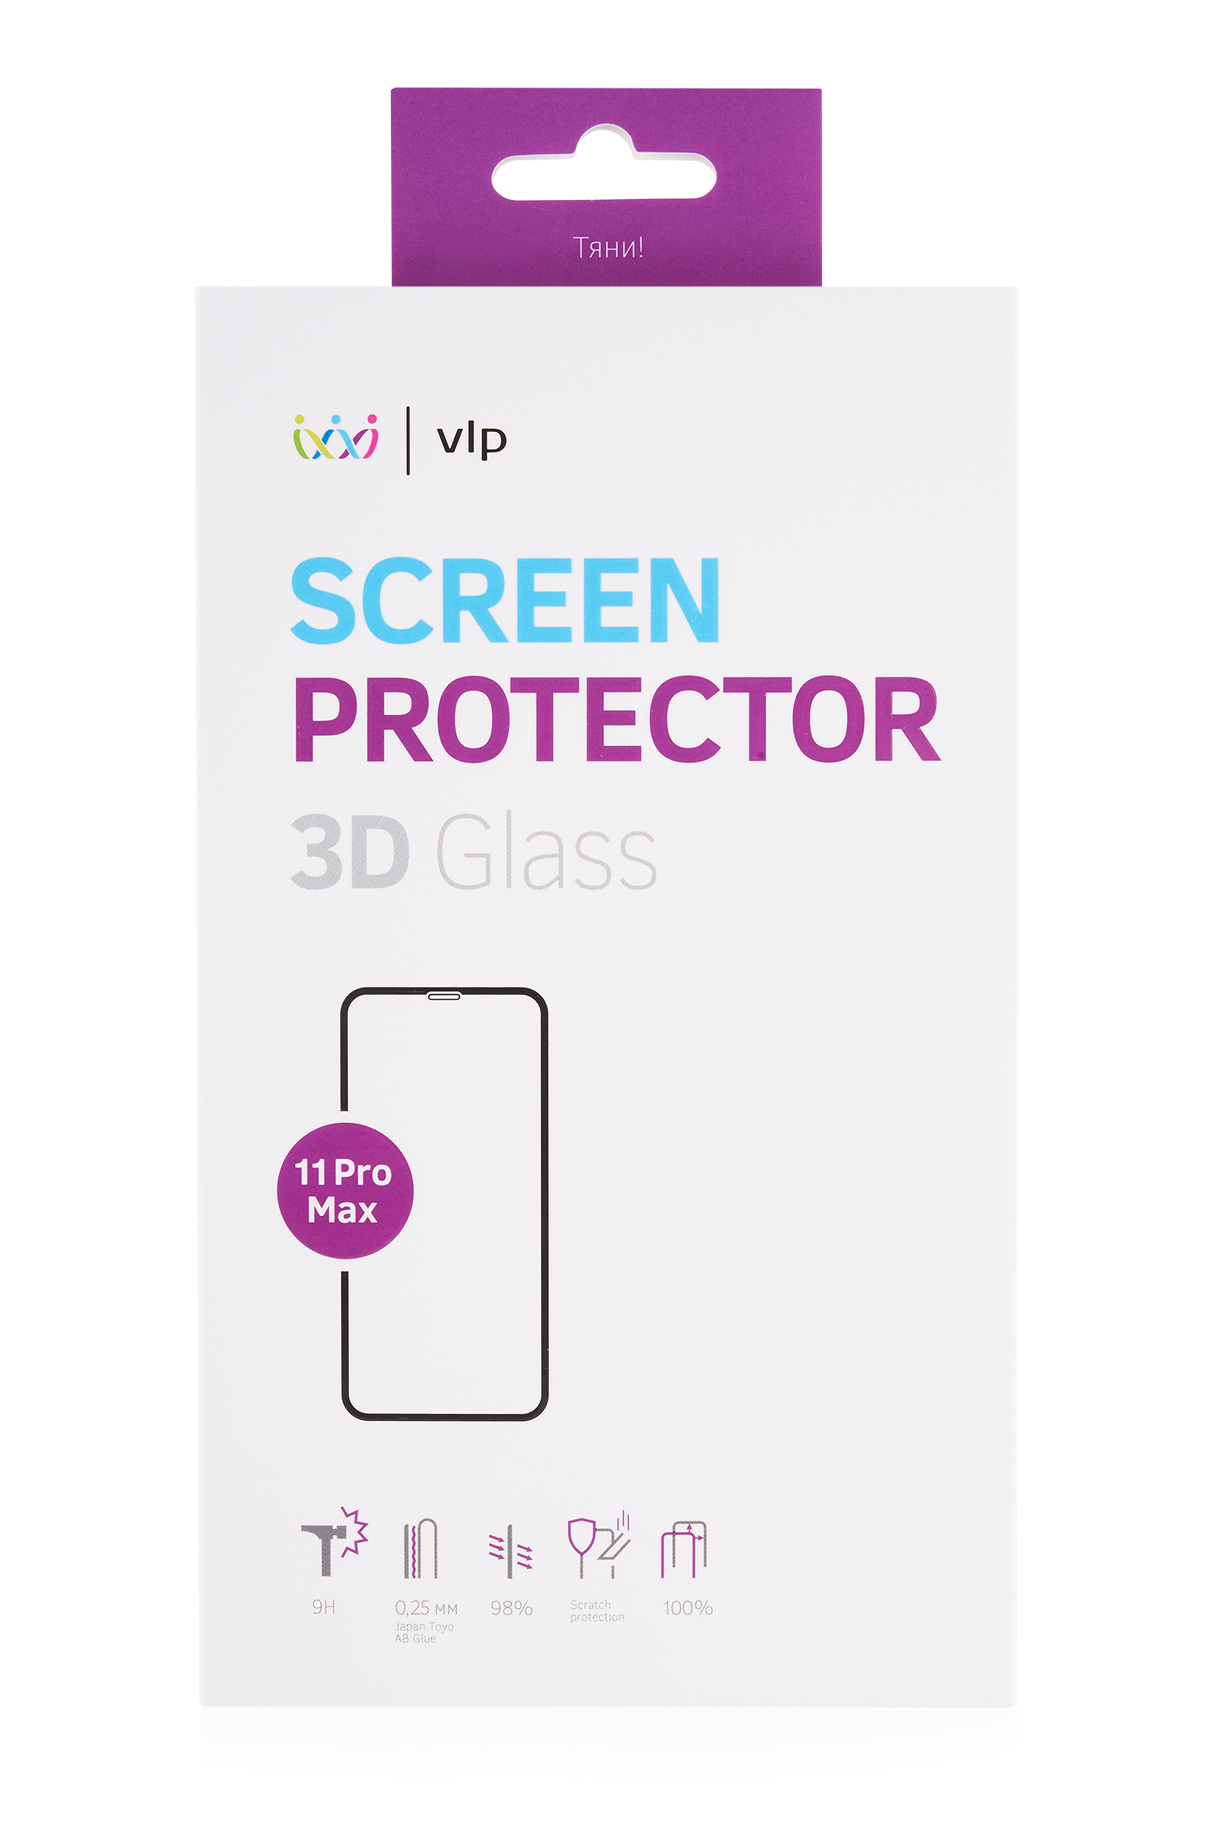 Стекло 3D защитное VLP для iPhone 11 ProMax/XsMax, олеофобное, с черной рамкой защитное стекло vlp стекло 3d защитное vlp для iphone 11 pro олеофобное с черной рамкой